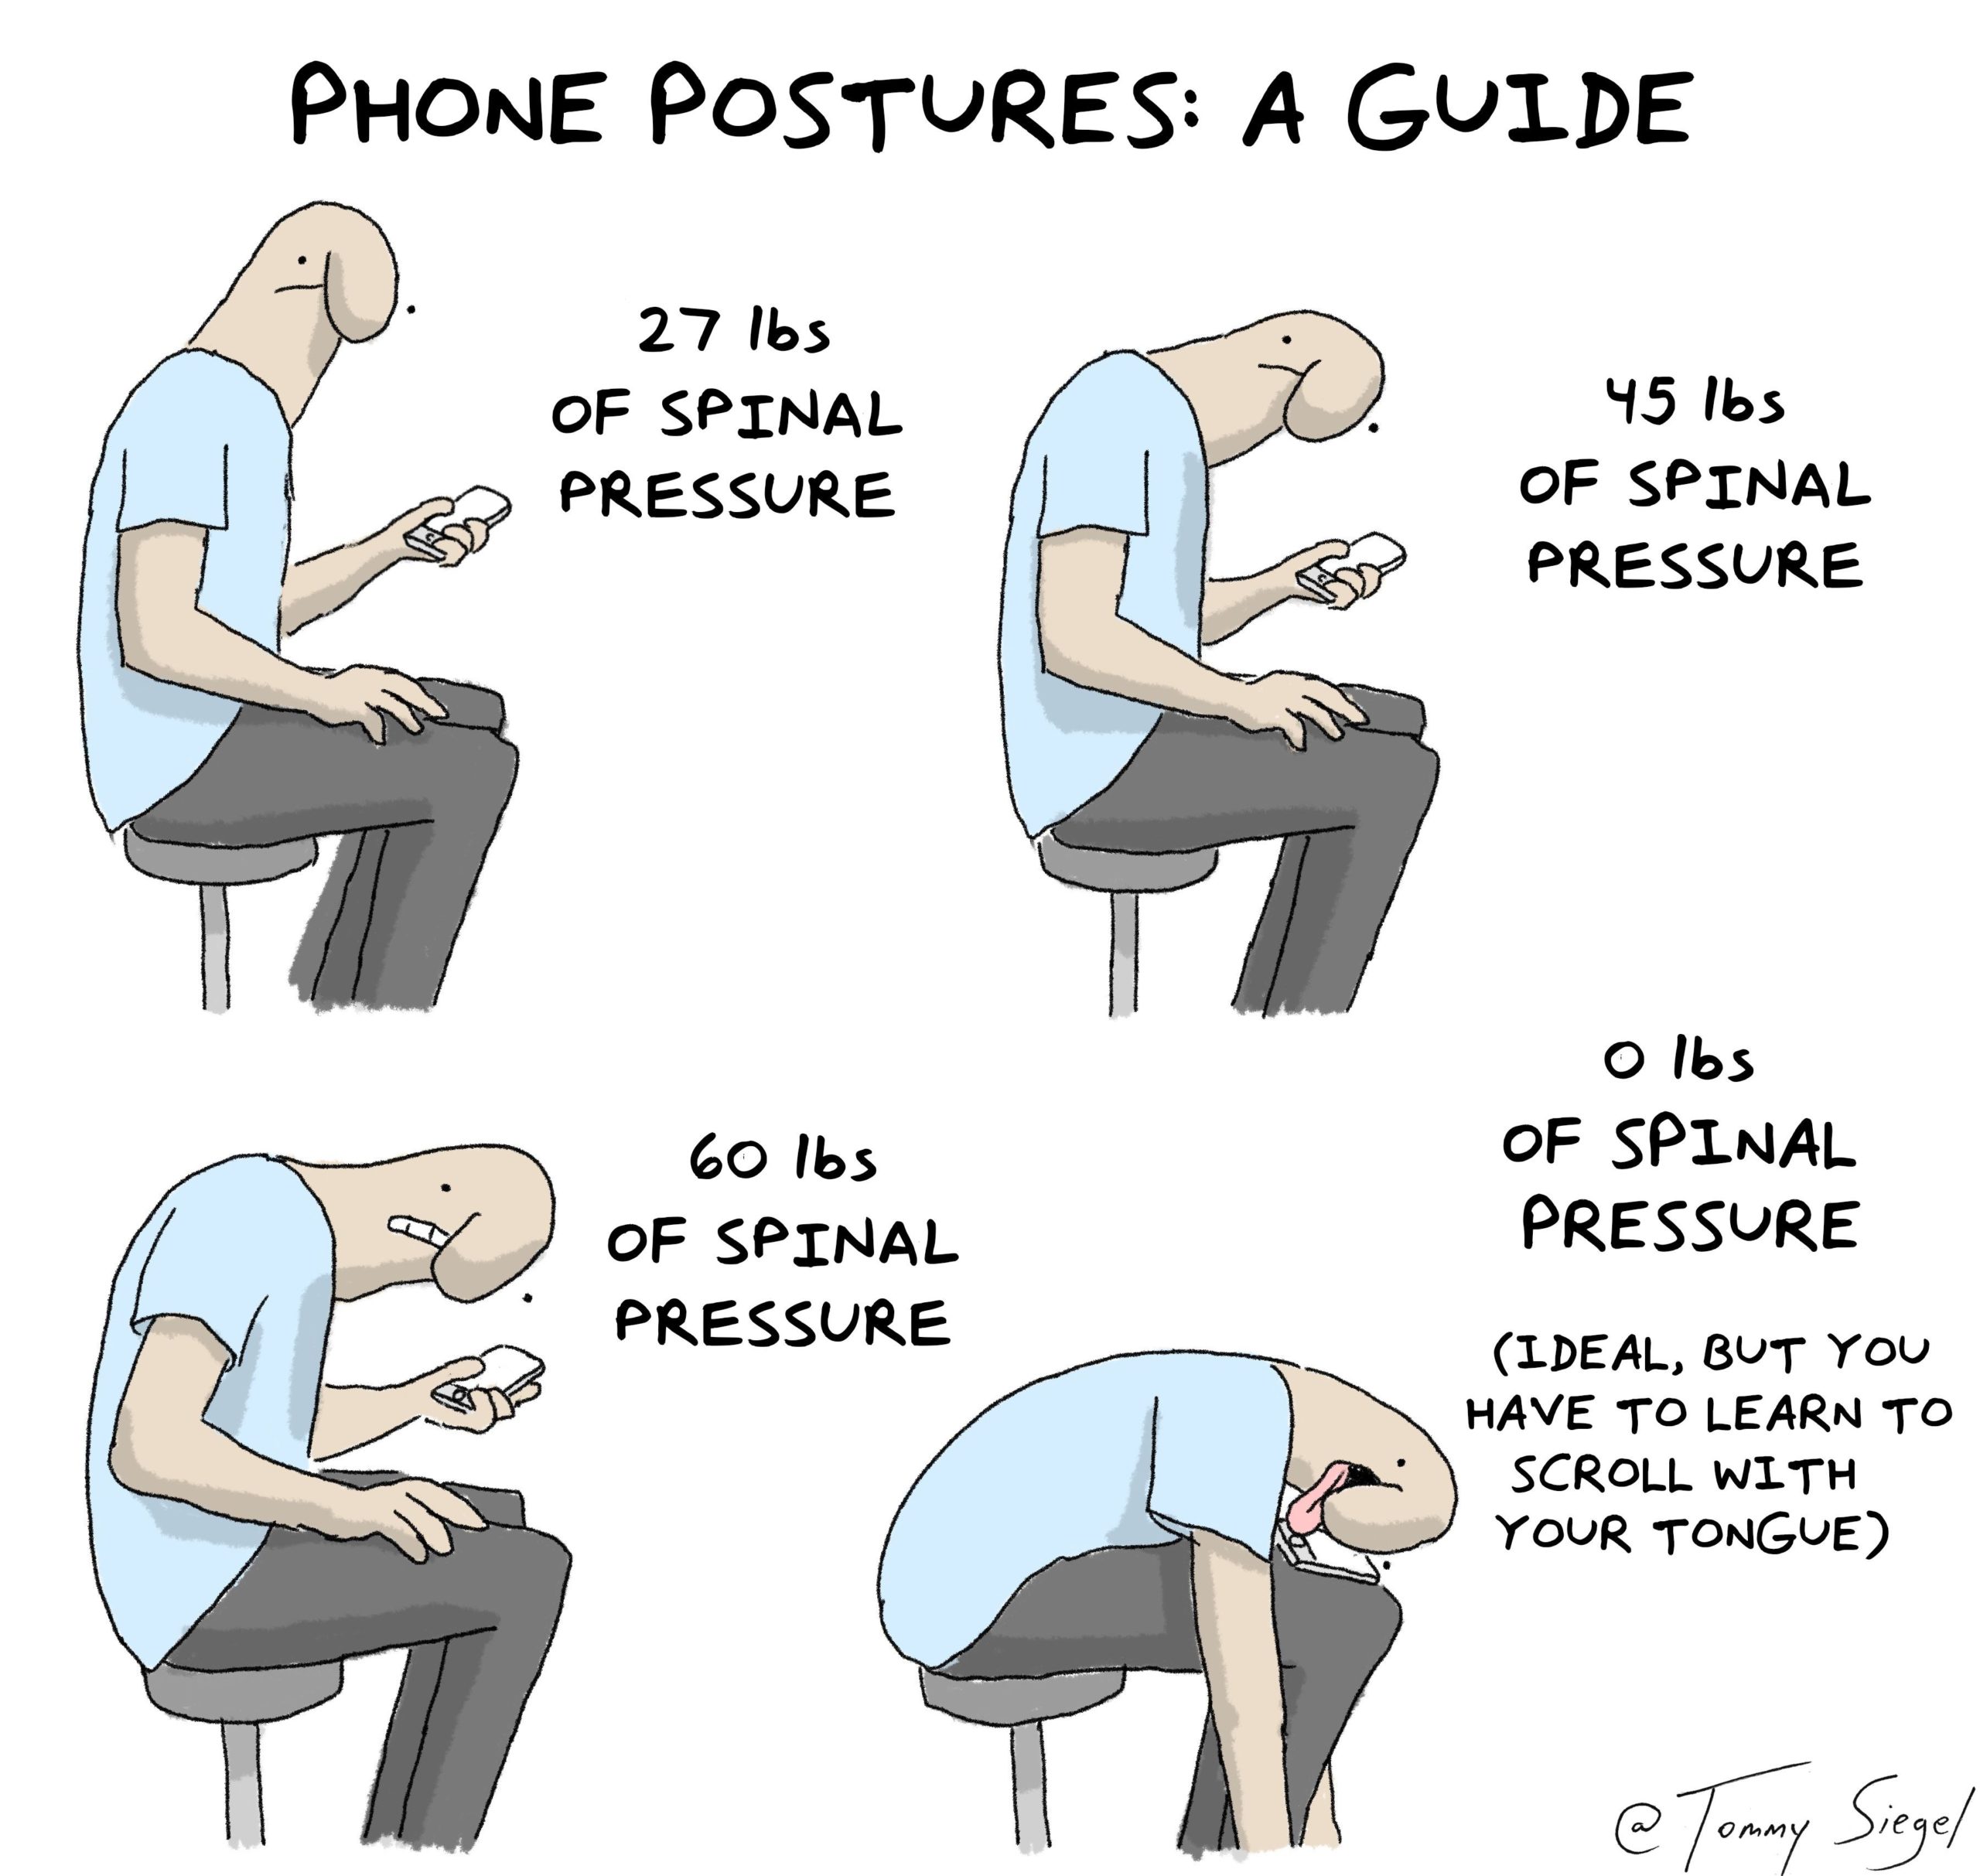 Professional+phone+postures.